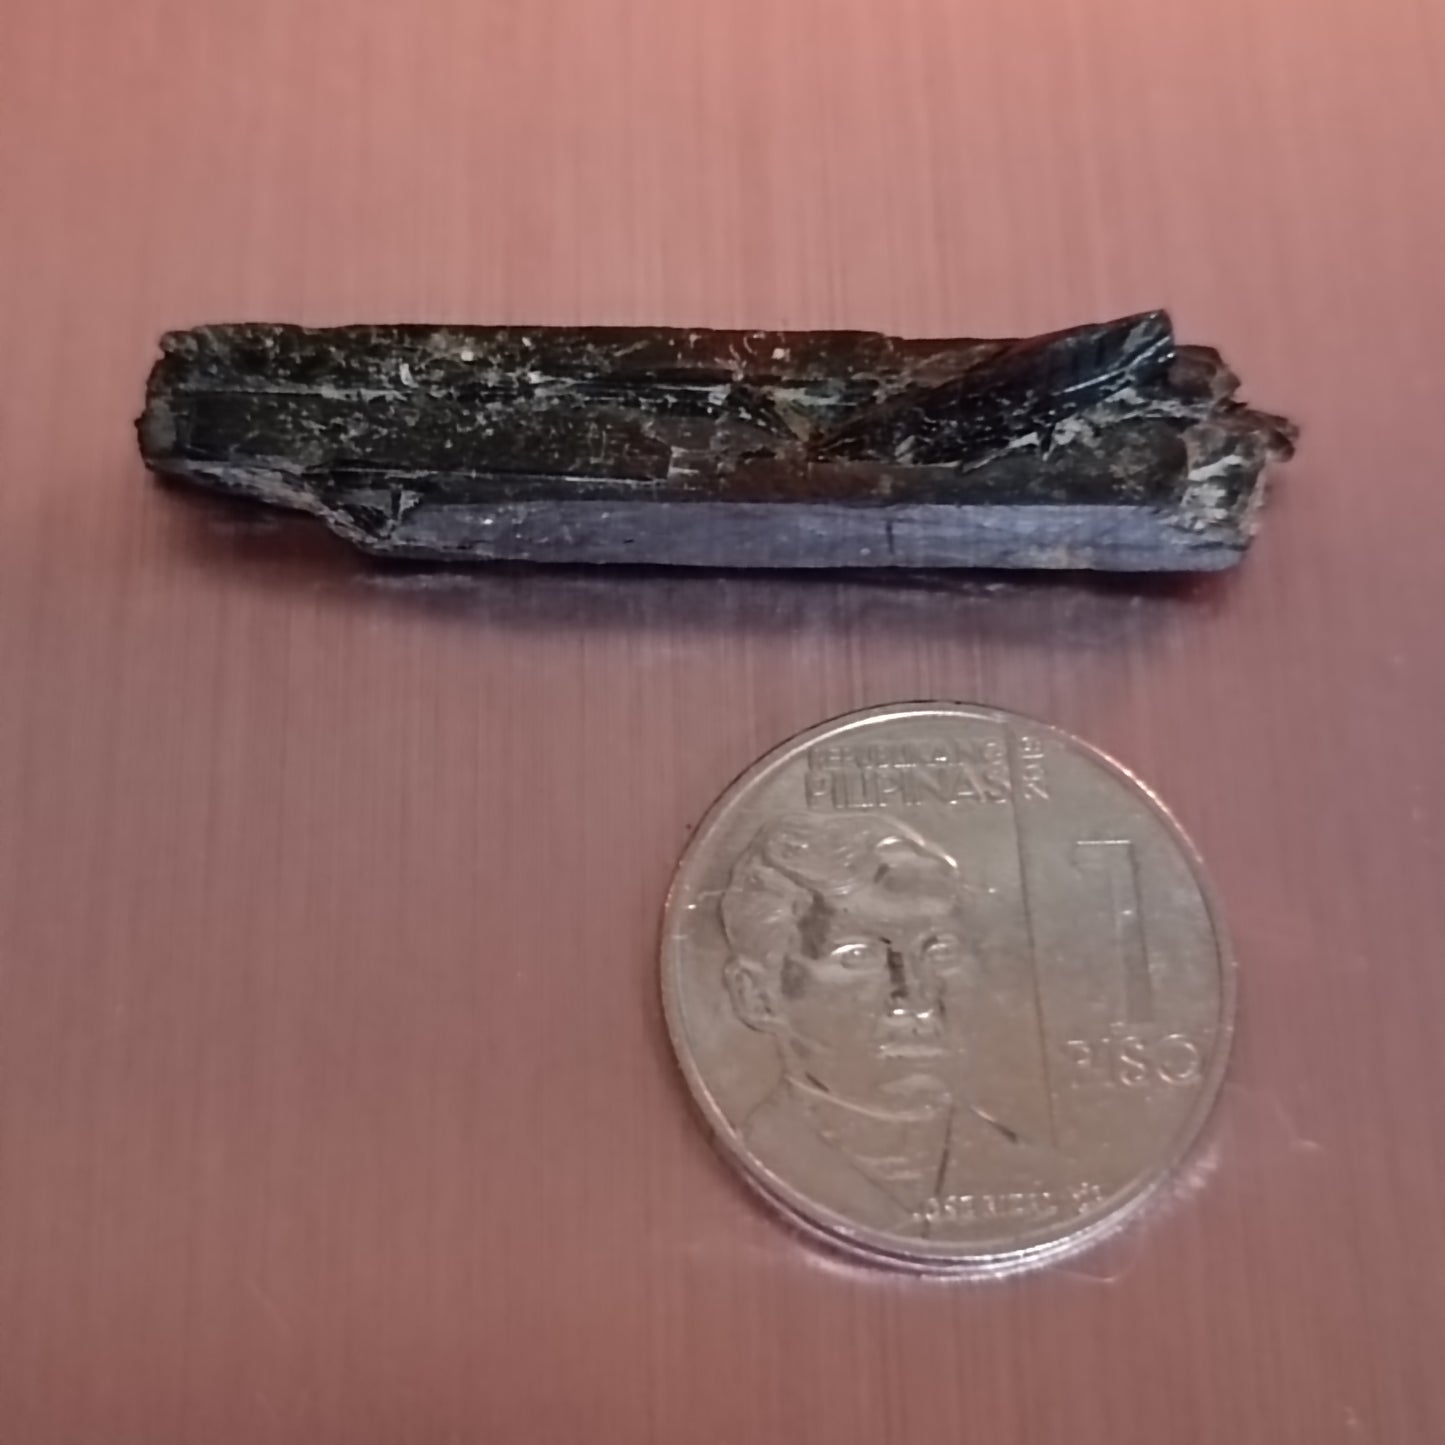 SALE!! Semi Glossy Black Aegirine Fragment